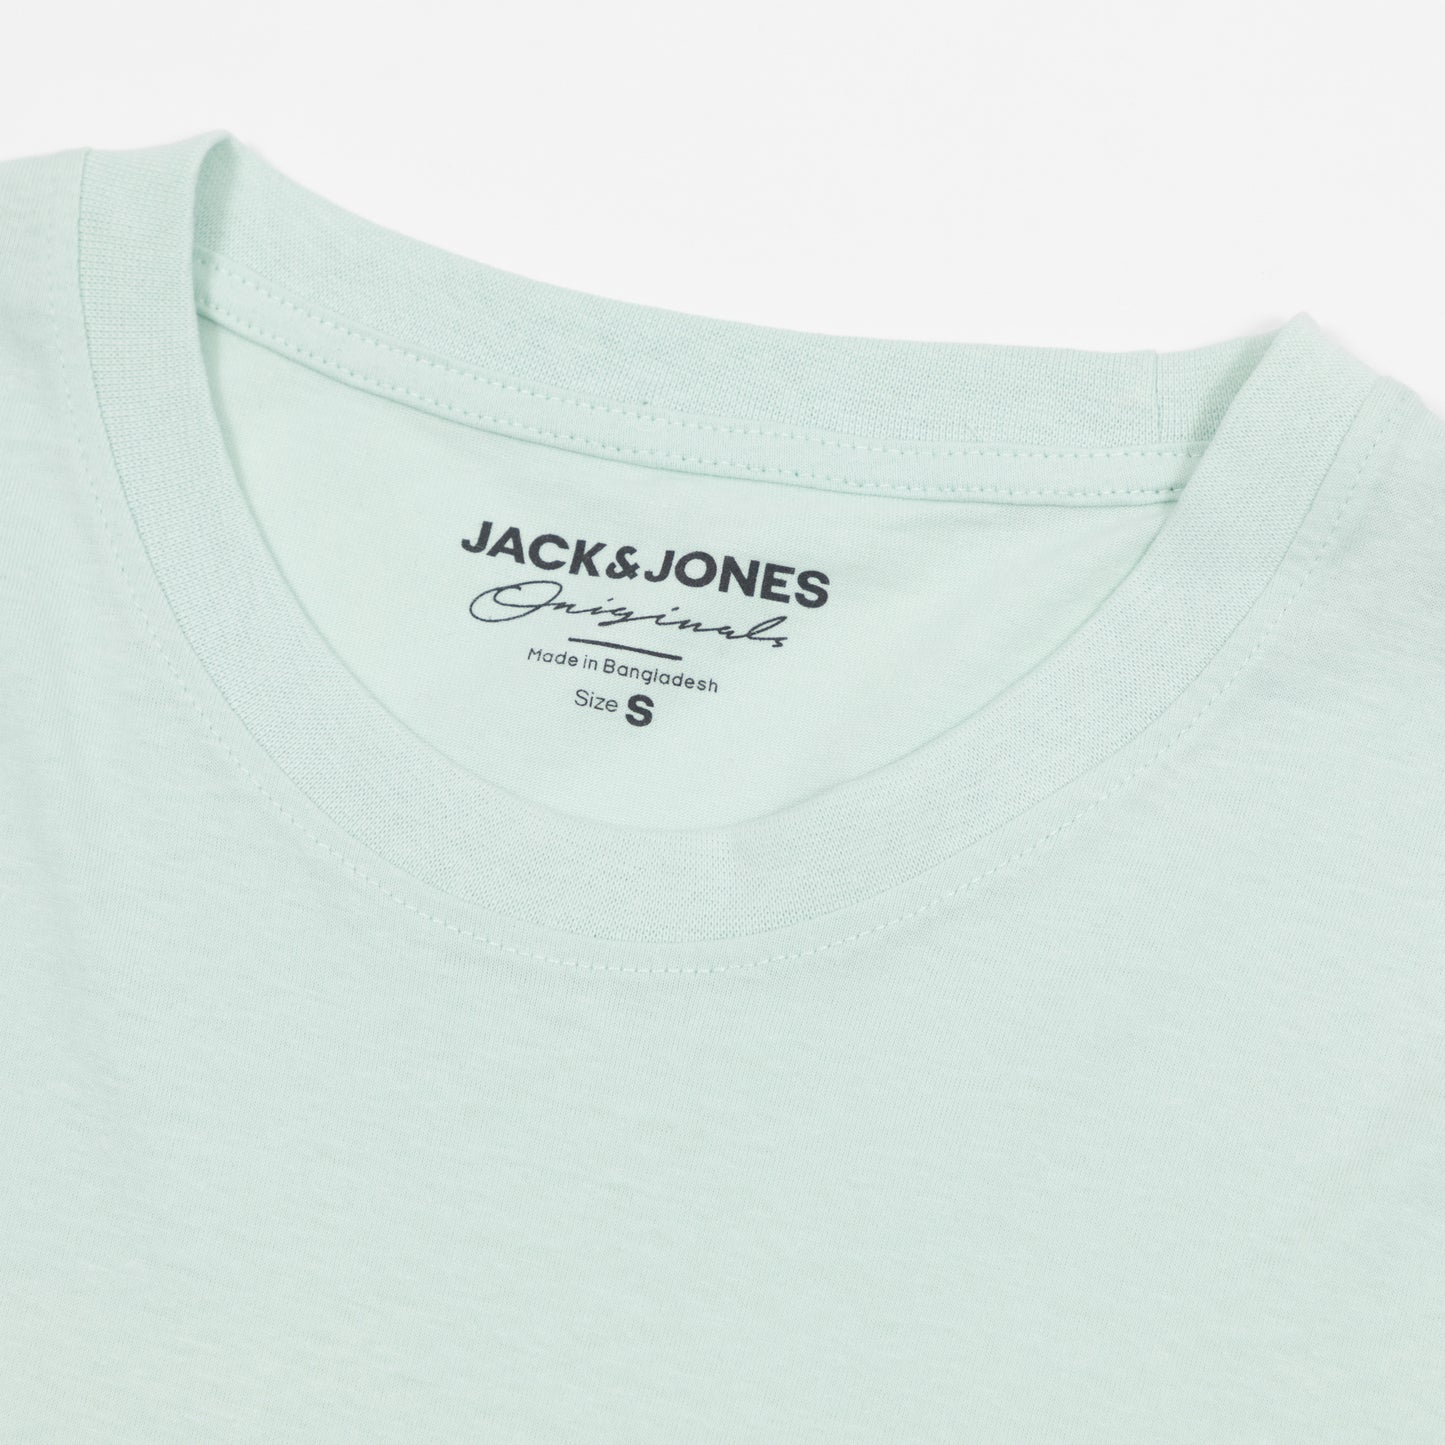 JACK & JONES Jortulum Statement Logo T-Shirt in PALE BLUE